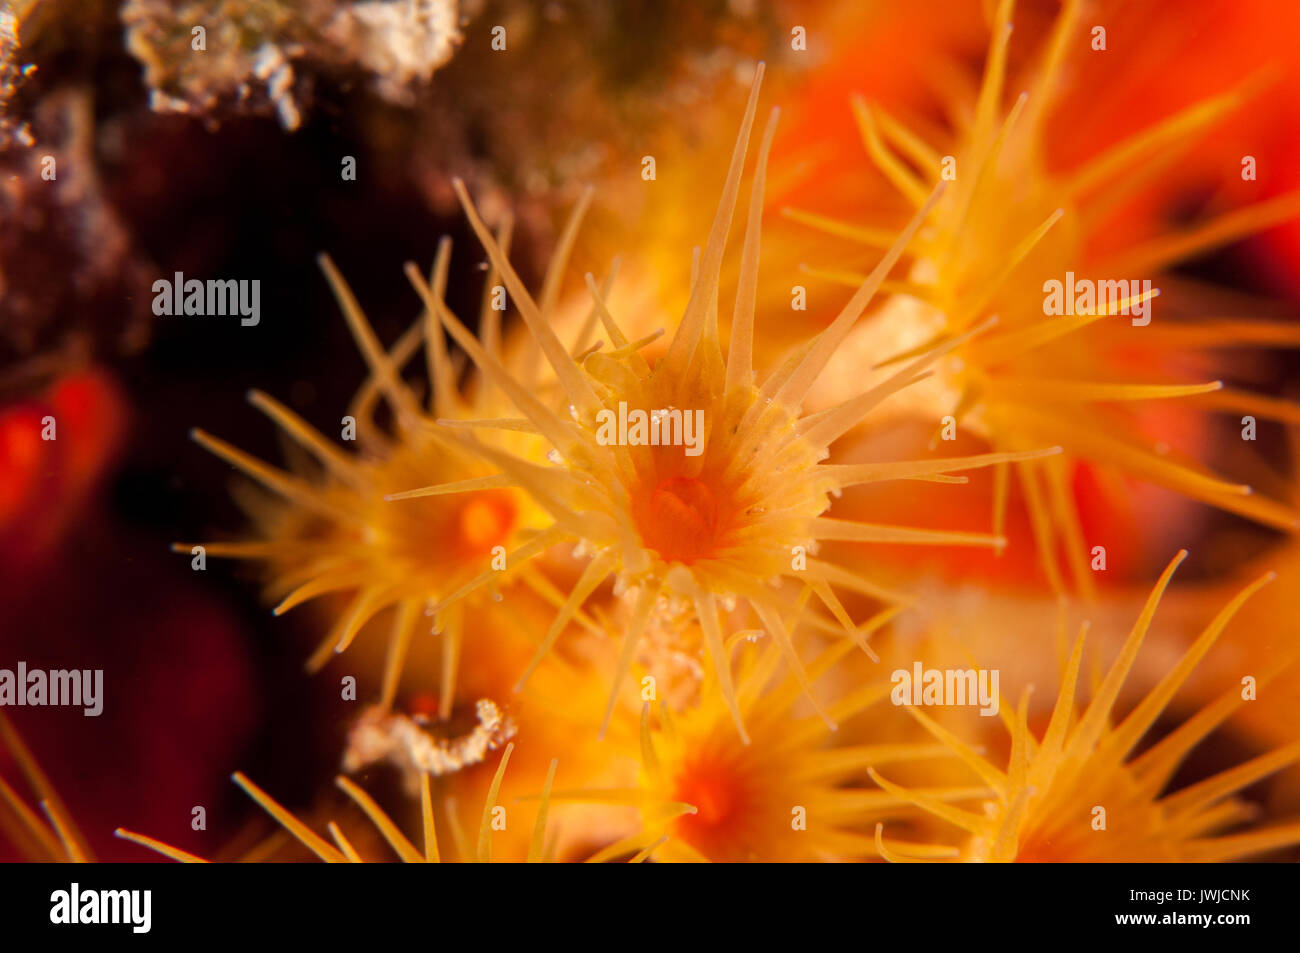 yellow cluster anemone (Parazoanthus axinellae), L'escala, Costa Brava, Catalonia, Spain Stock Photo